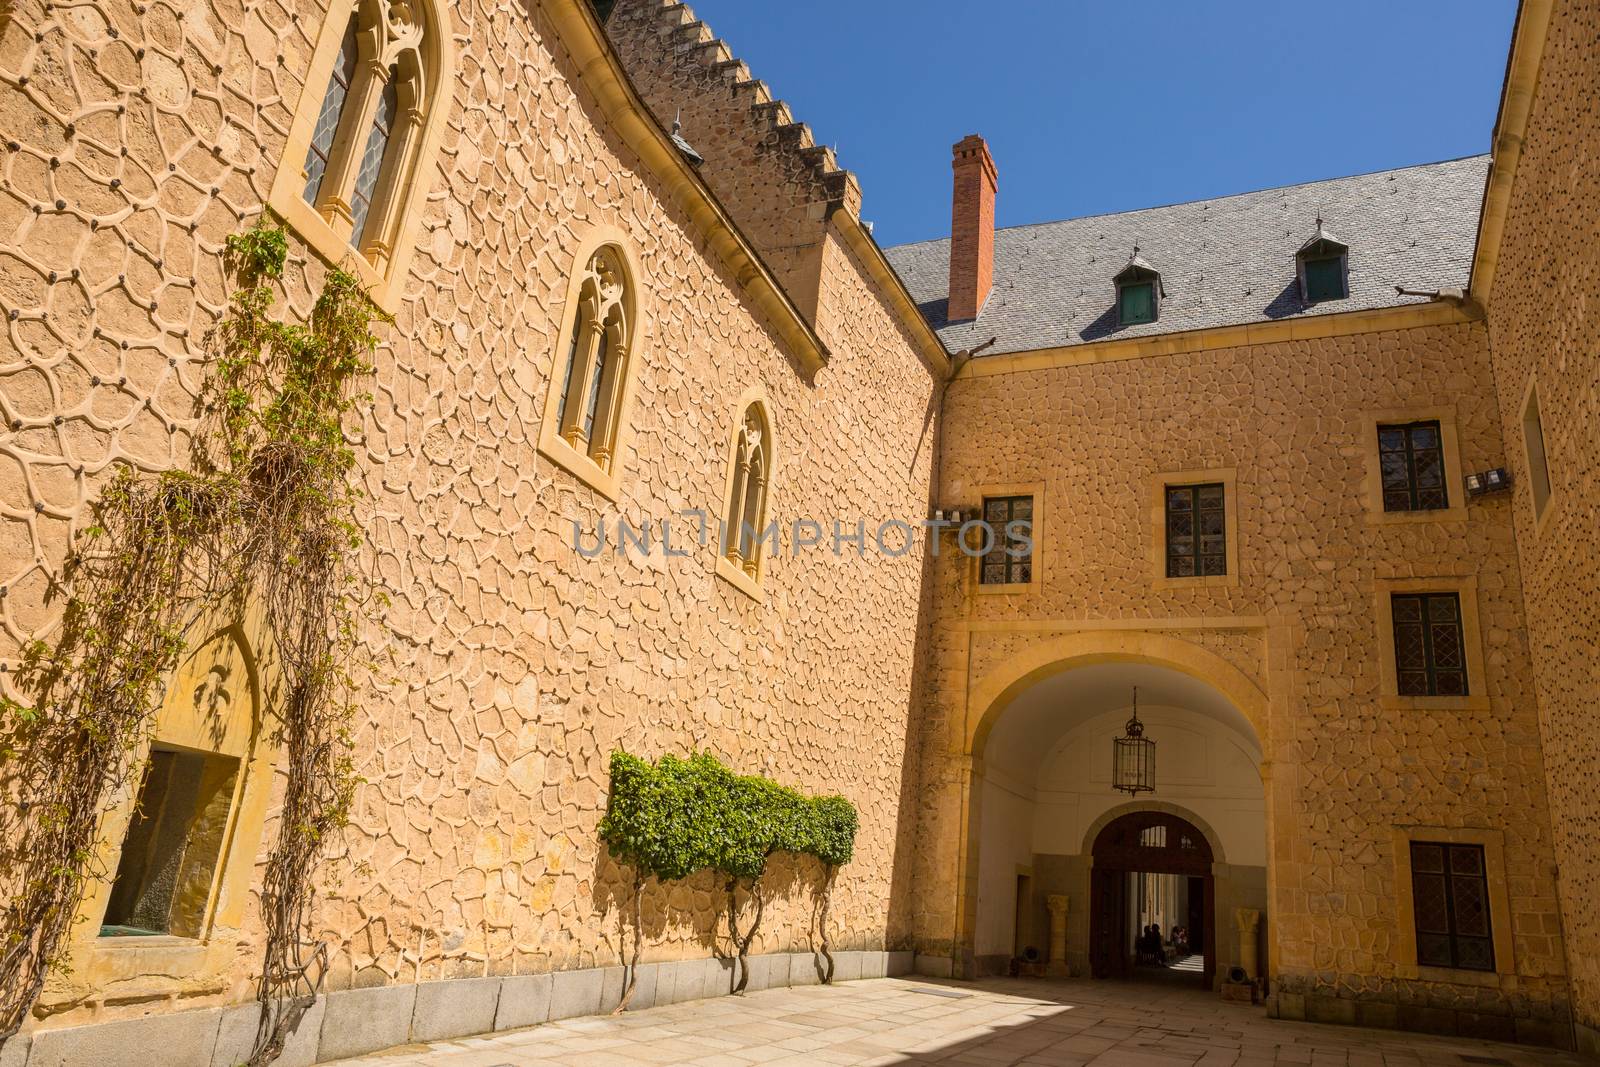 Segovia, Spain - The famous Alcazar castle of Segovia, Castilla y Leon, Spain